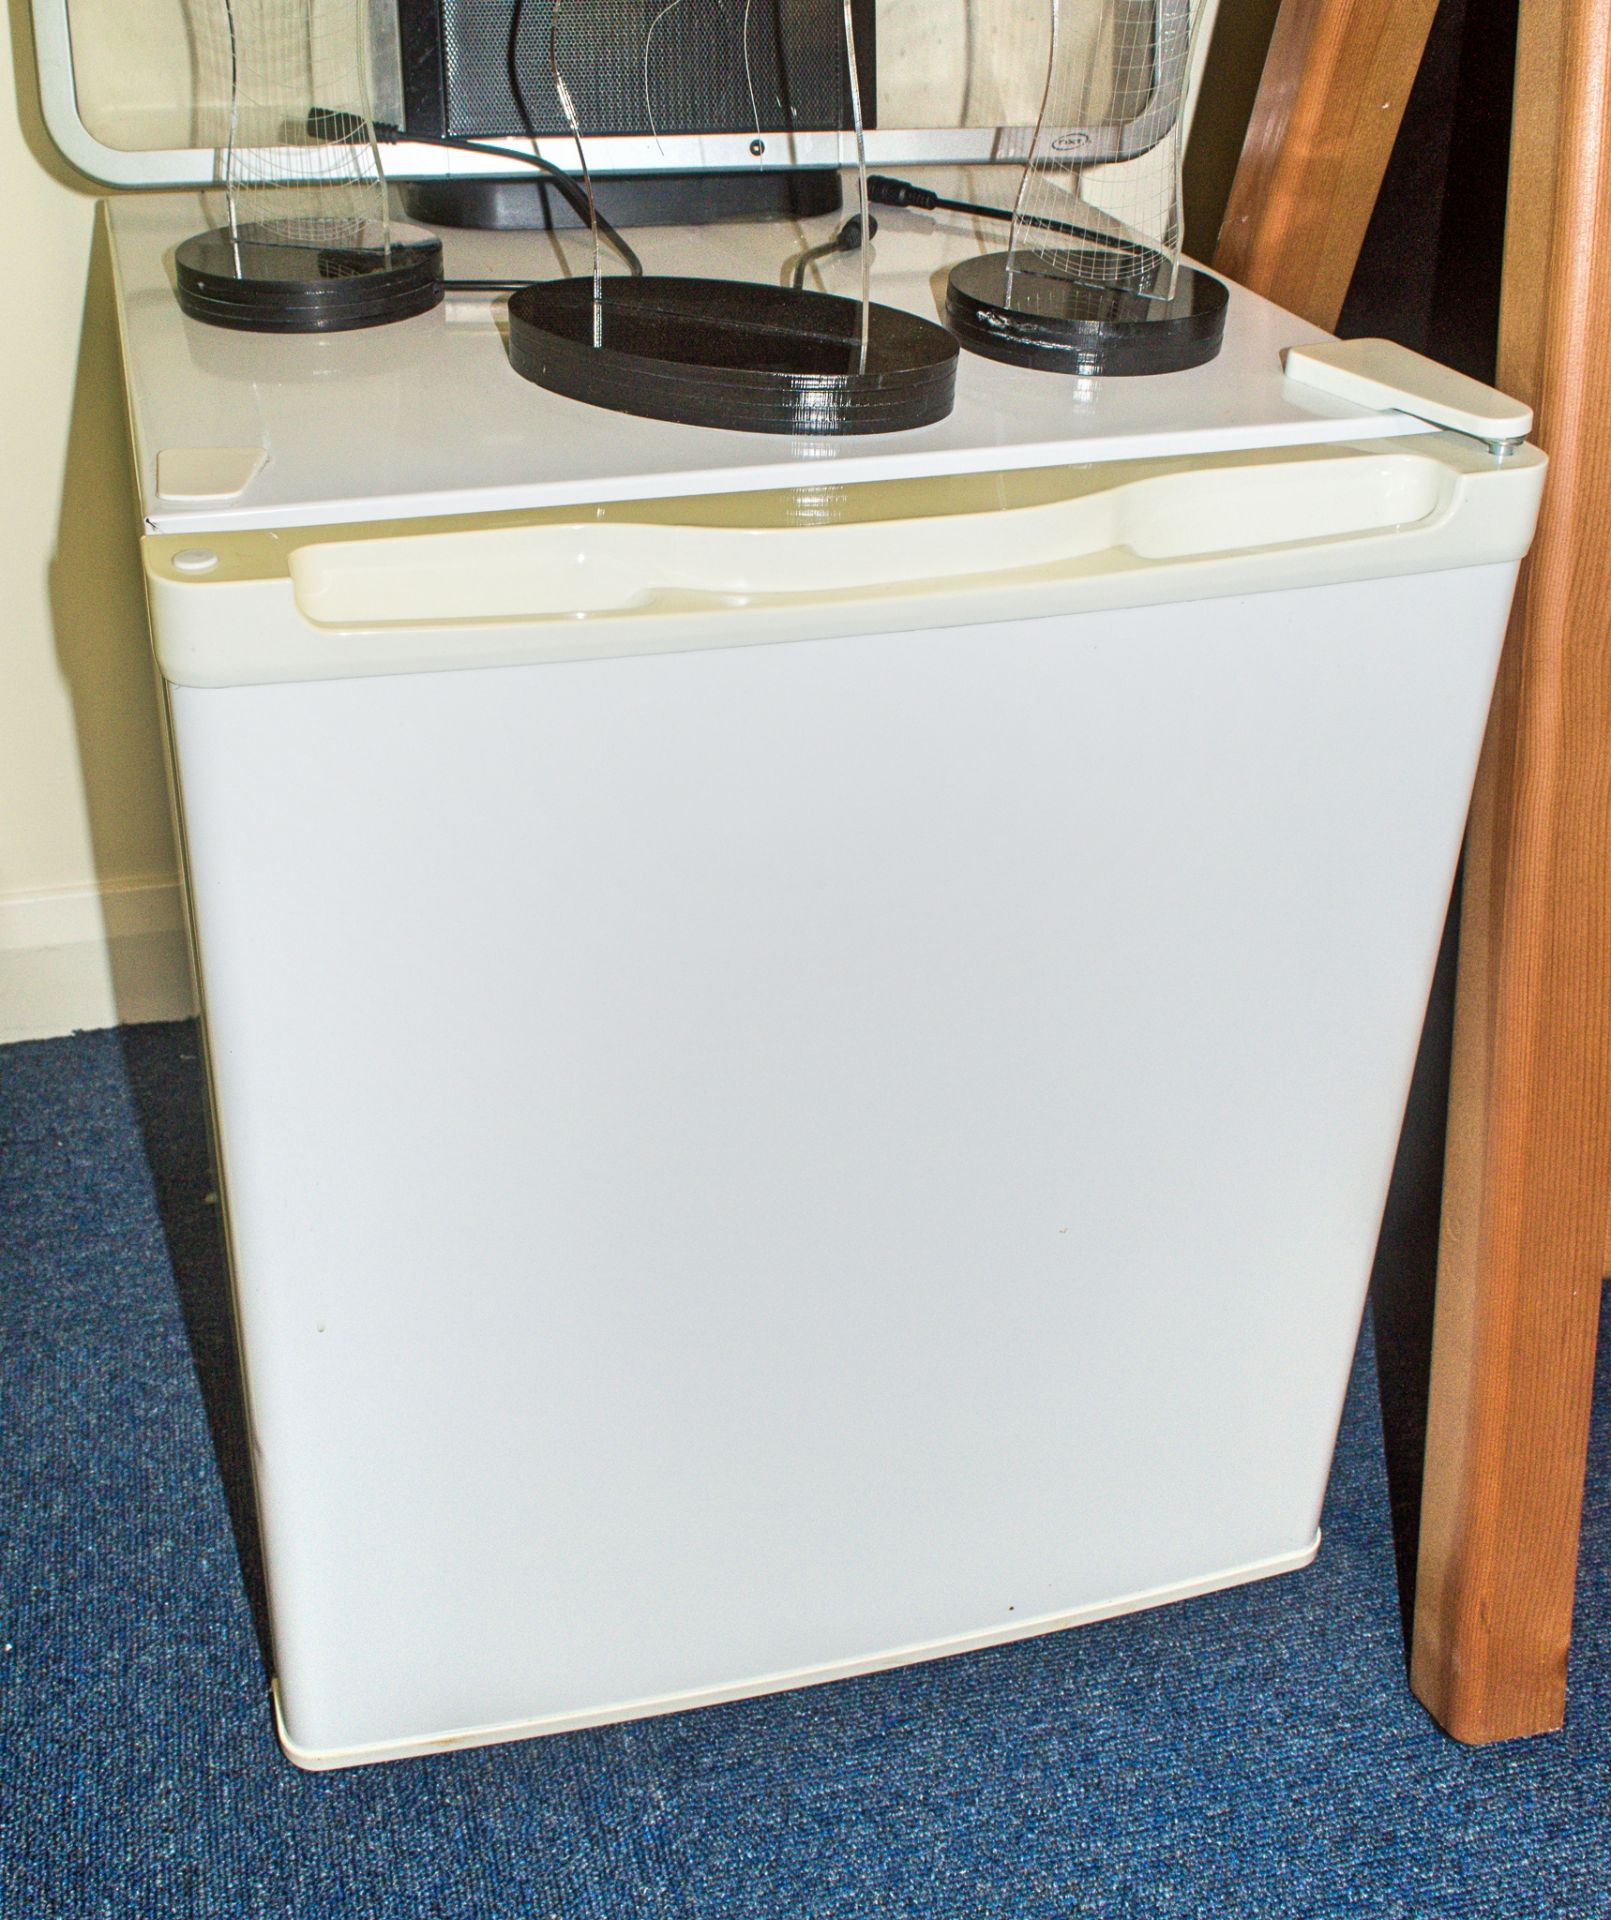 Refrigerator Dimensions: 50cm D x 48 cm H x 46 cm W